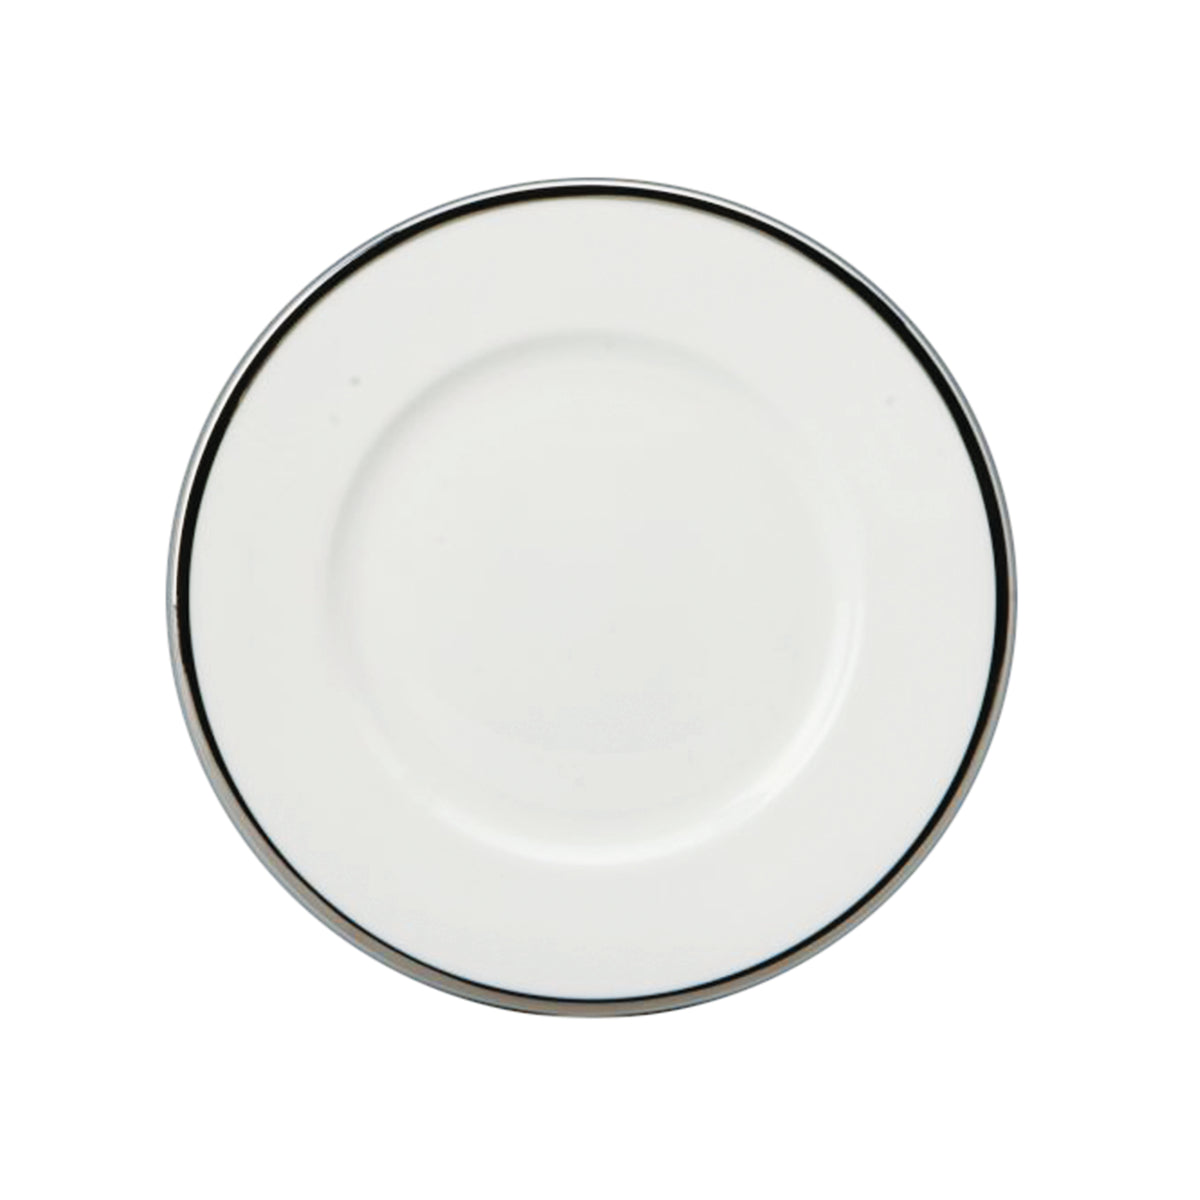 Comet - Salad / Dessert Plate